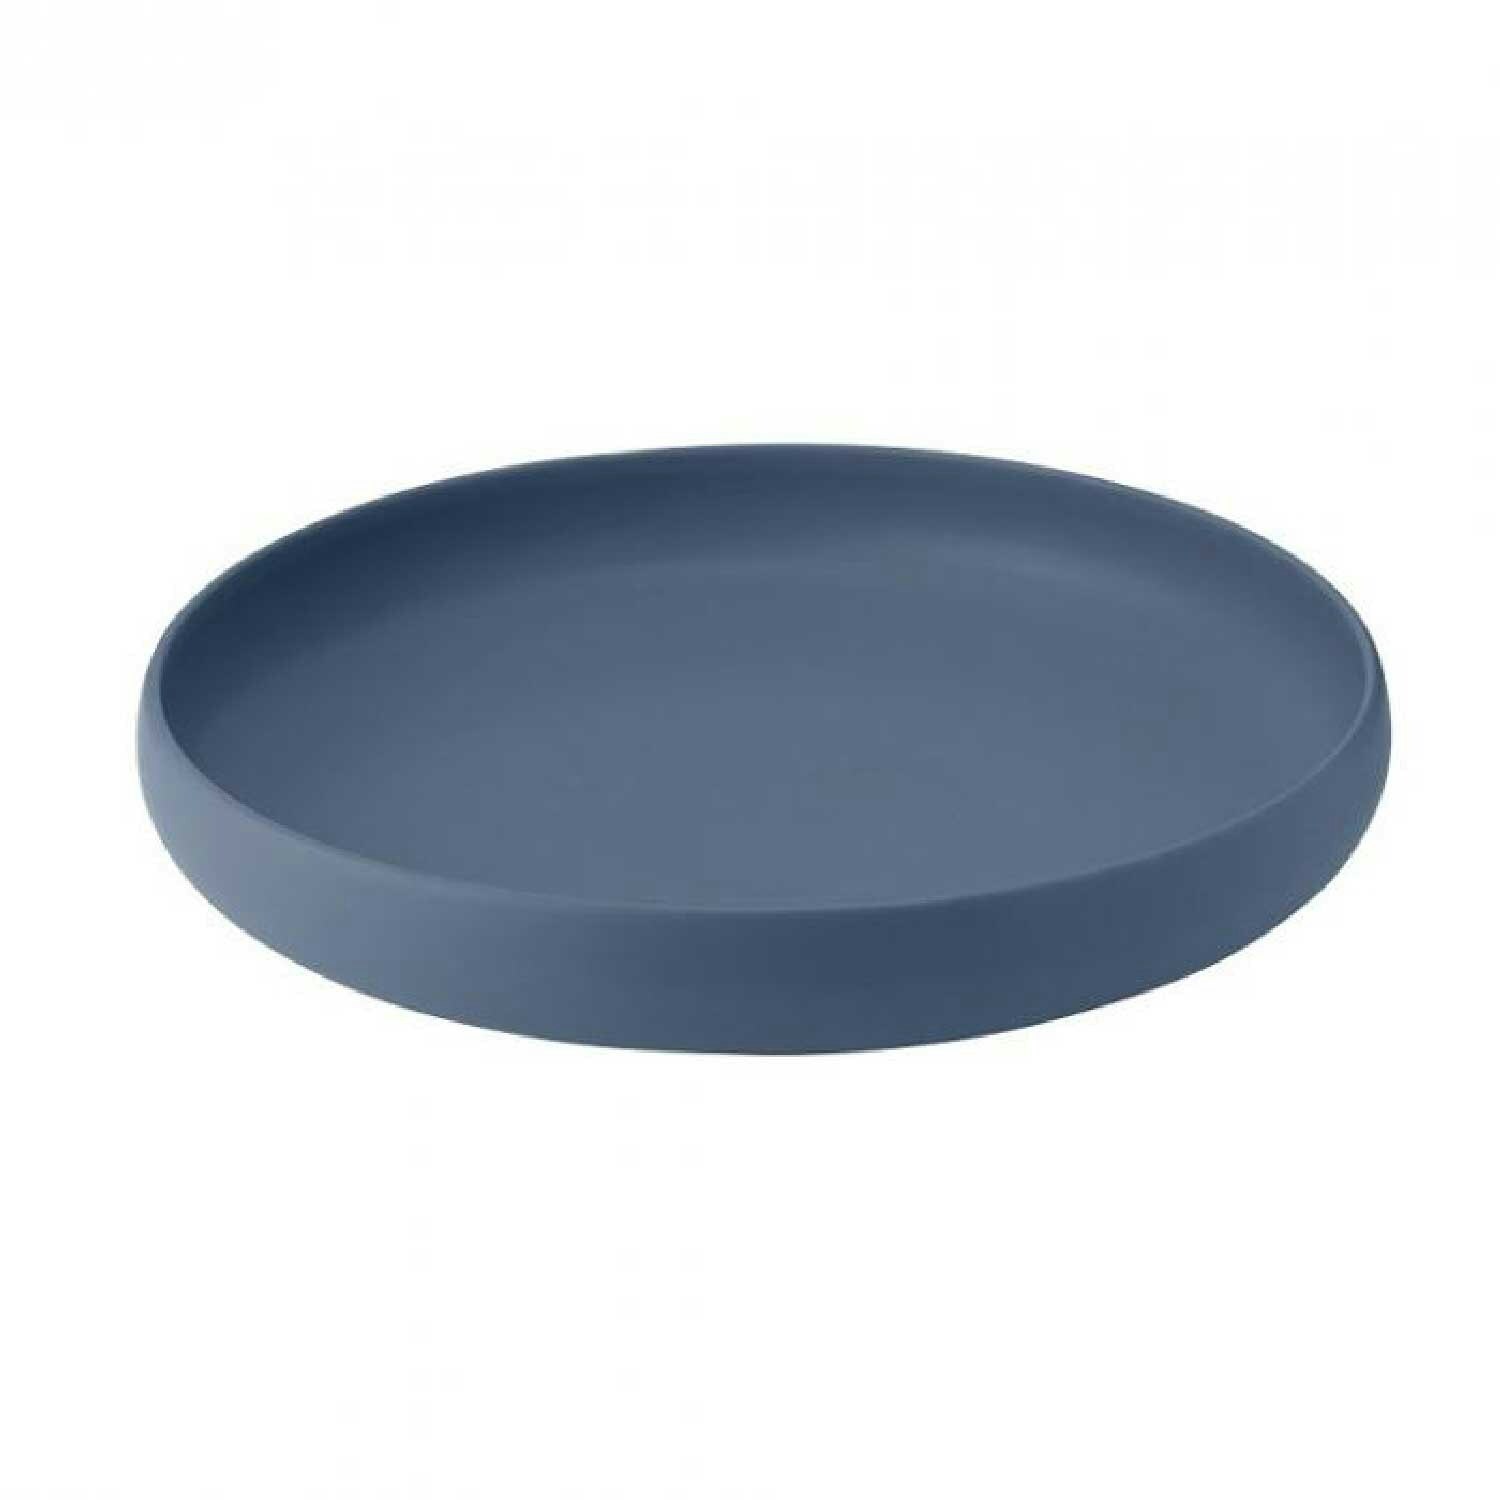 Dish - White Oval Serving Dish 34 x 23 cm